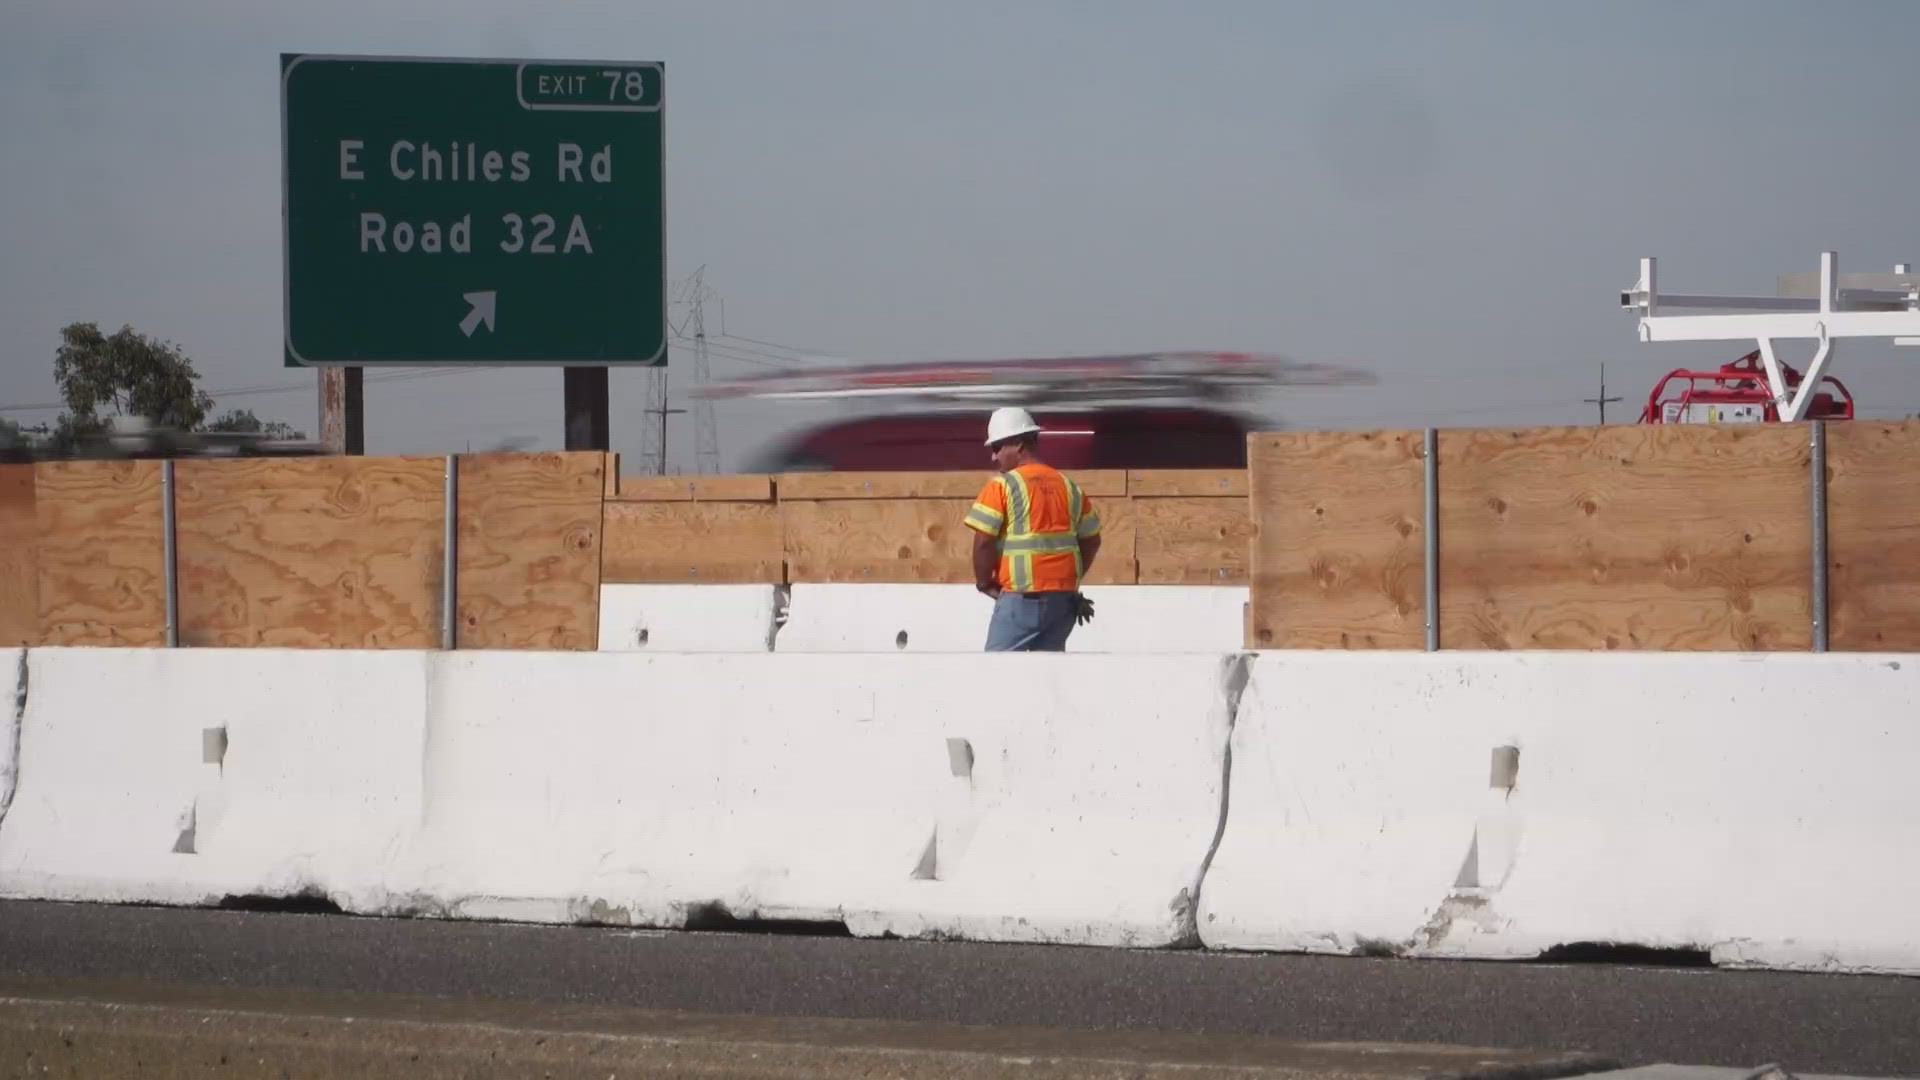 Here's the latest update on I-80, Highway 50 construction near Davis, Sacramento.